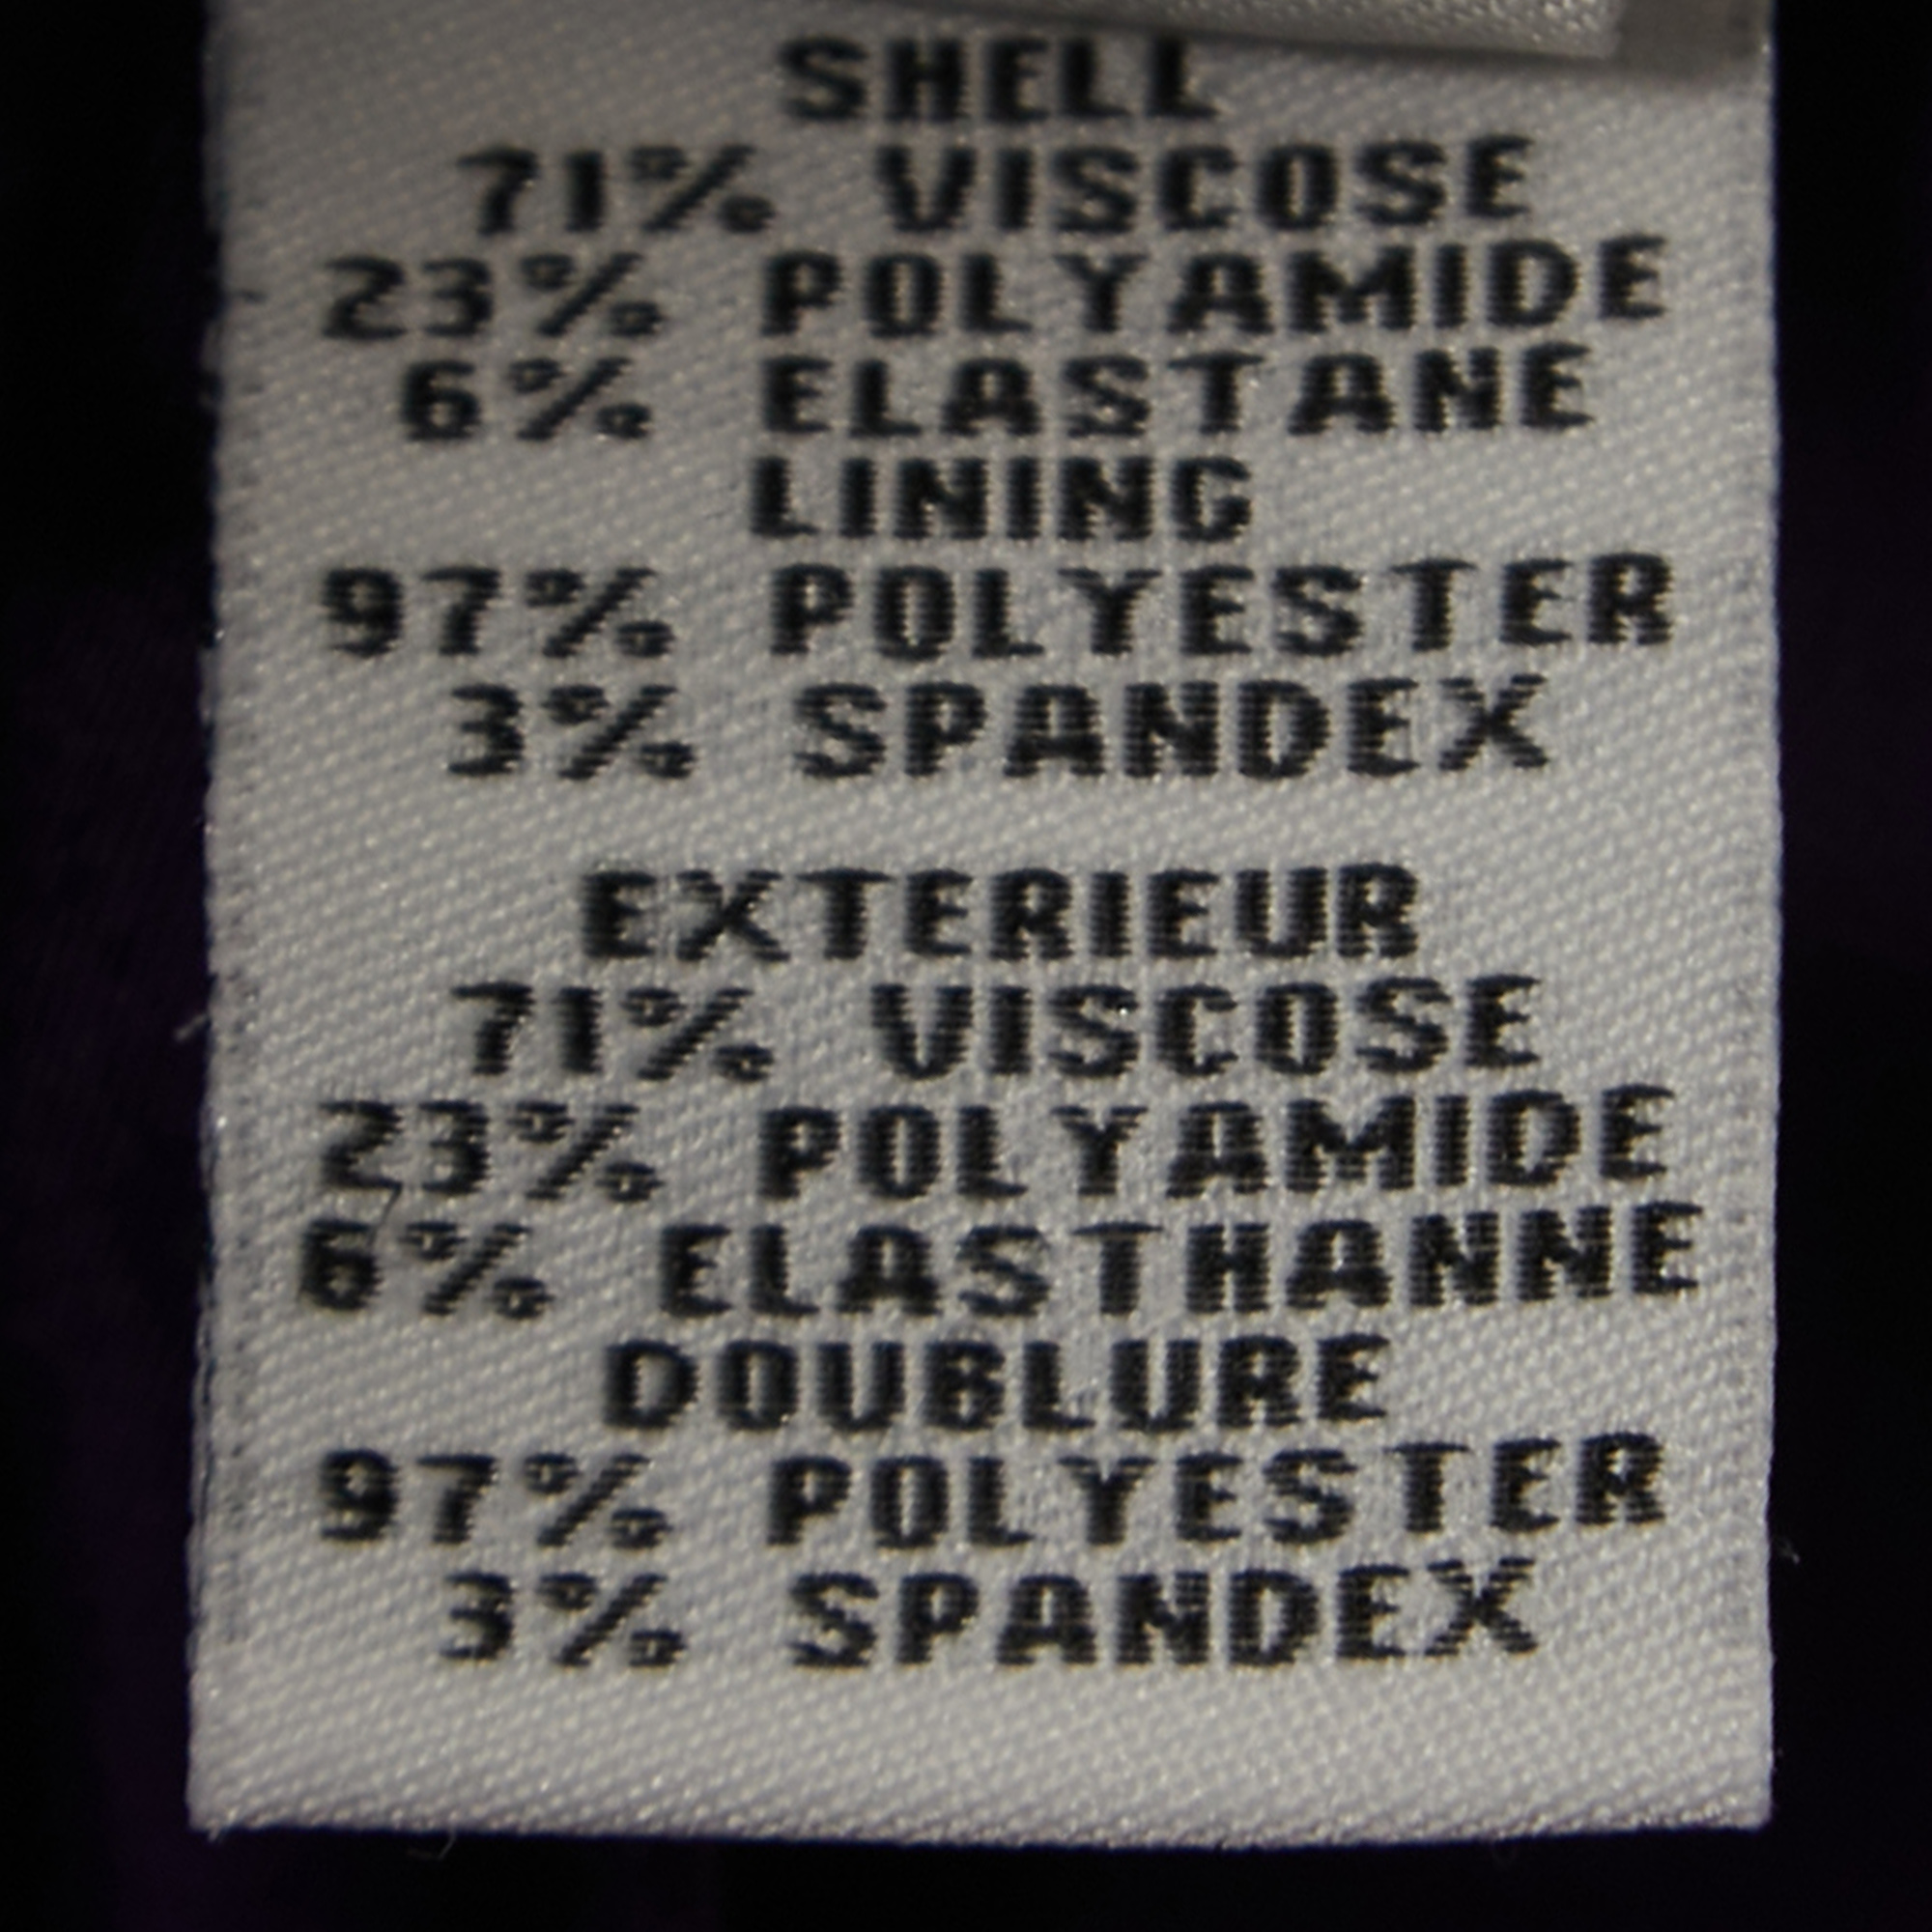 Diane Von Furstenberg Purple Knit Draped Sleeveless Mini Dress S